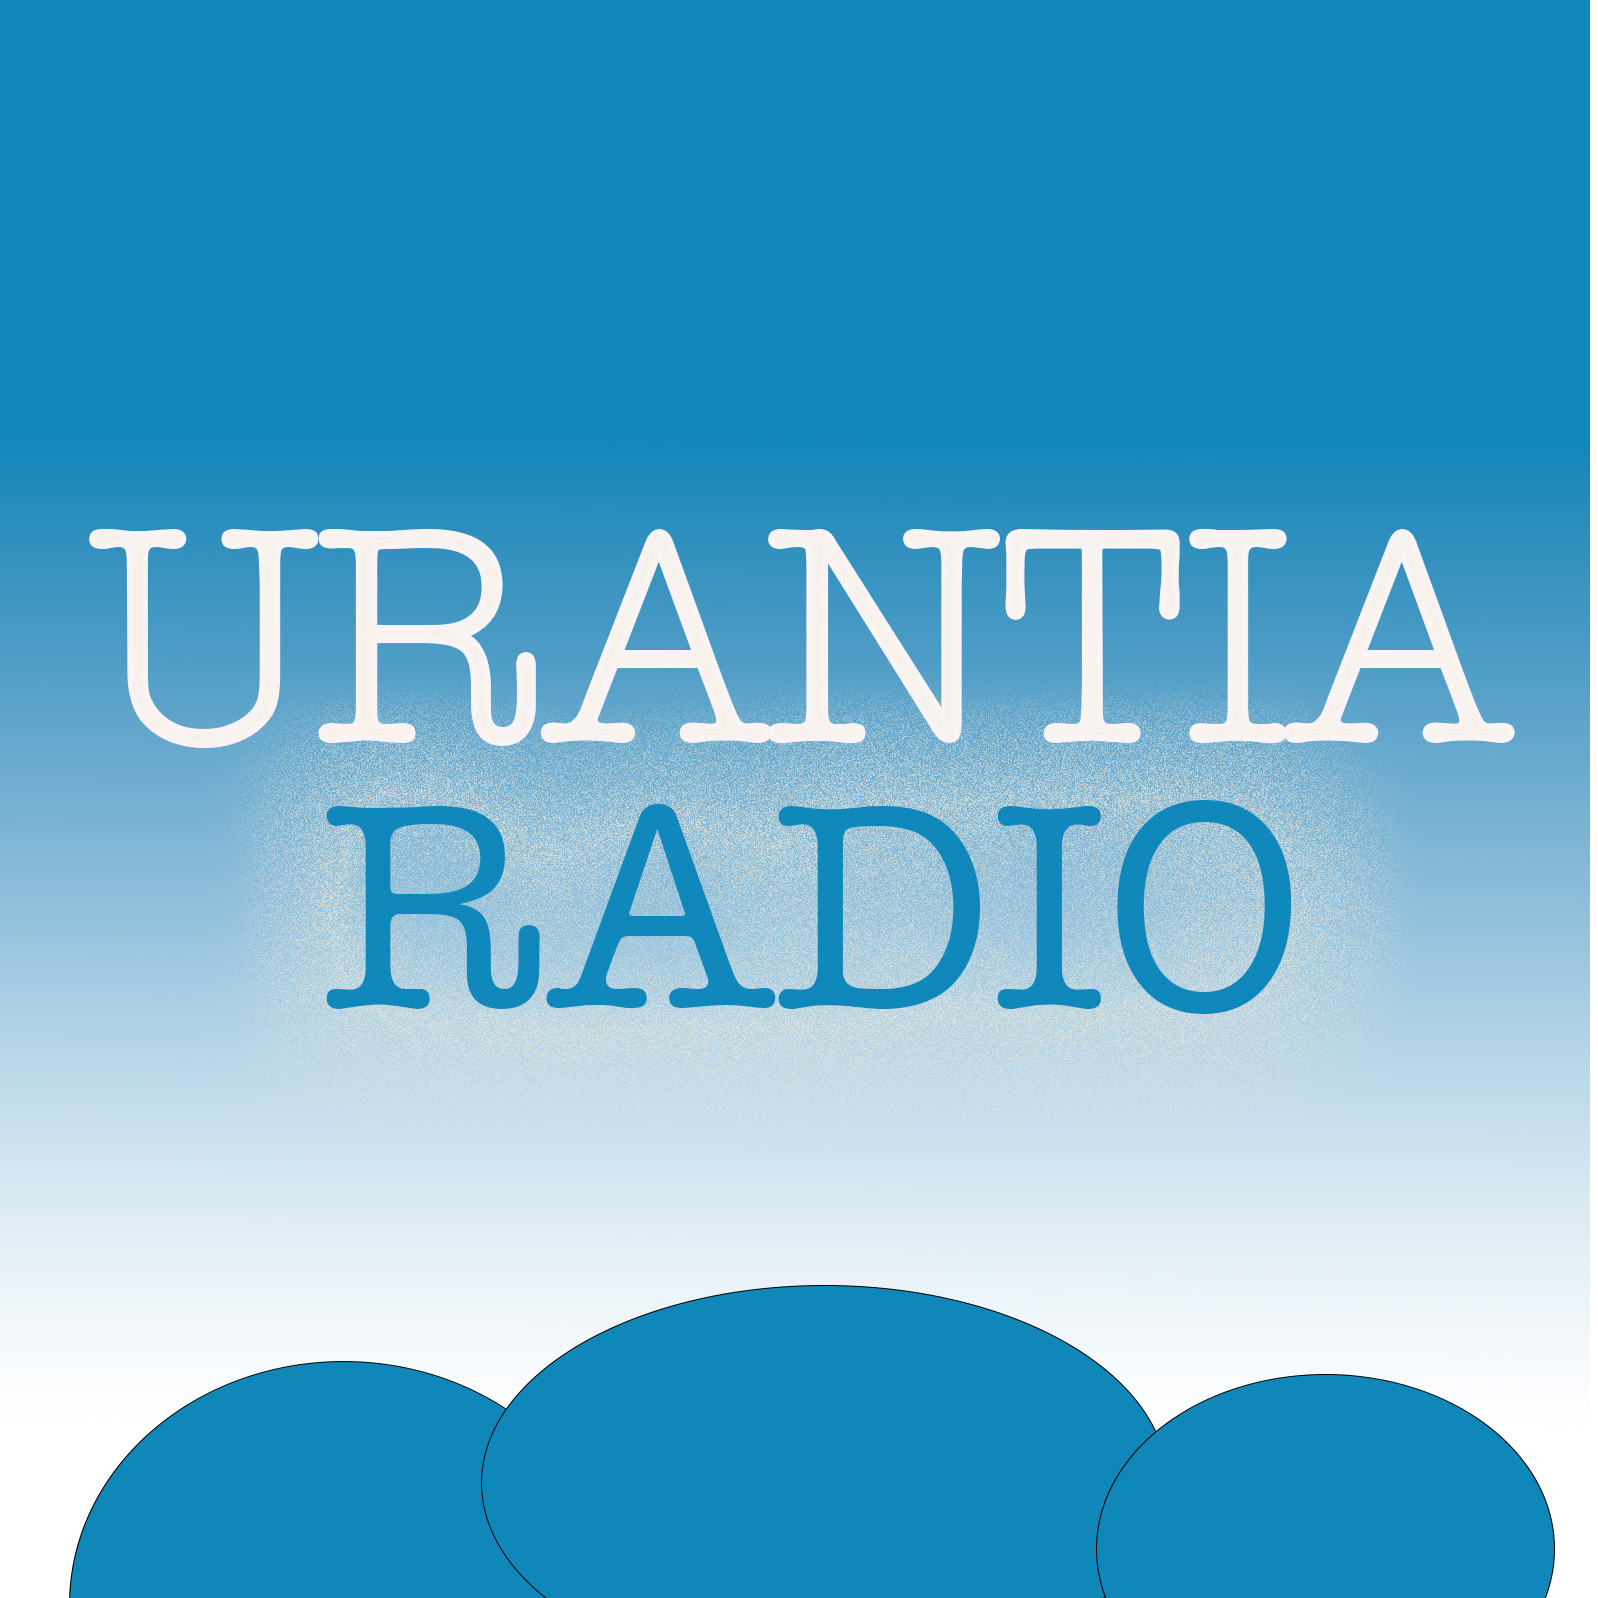 Urantia Radio Channel